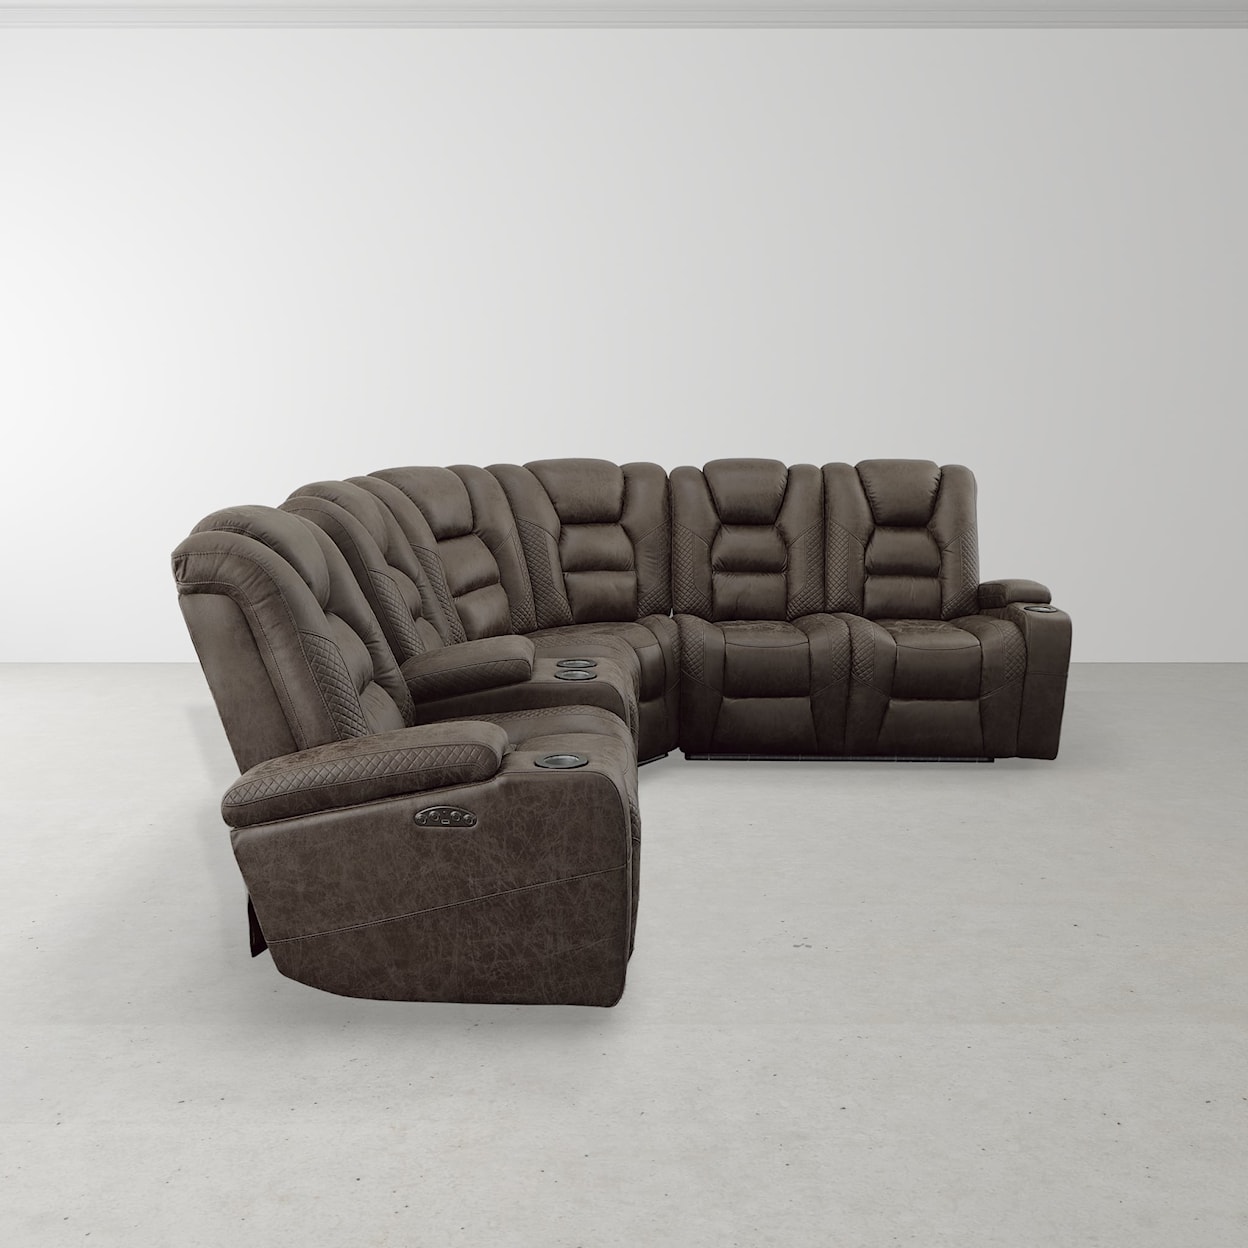 Sarah Randolph Designs 549 Three Piece Reclining Sectional Sofa